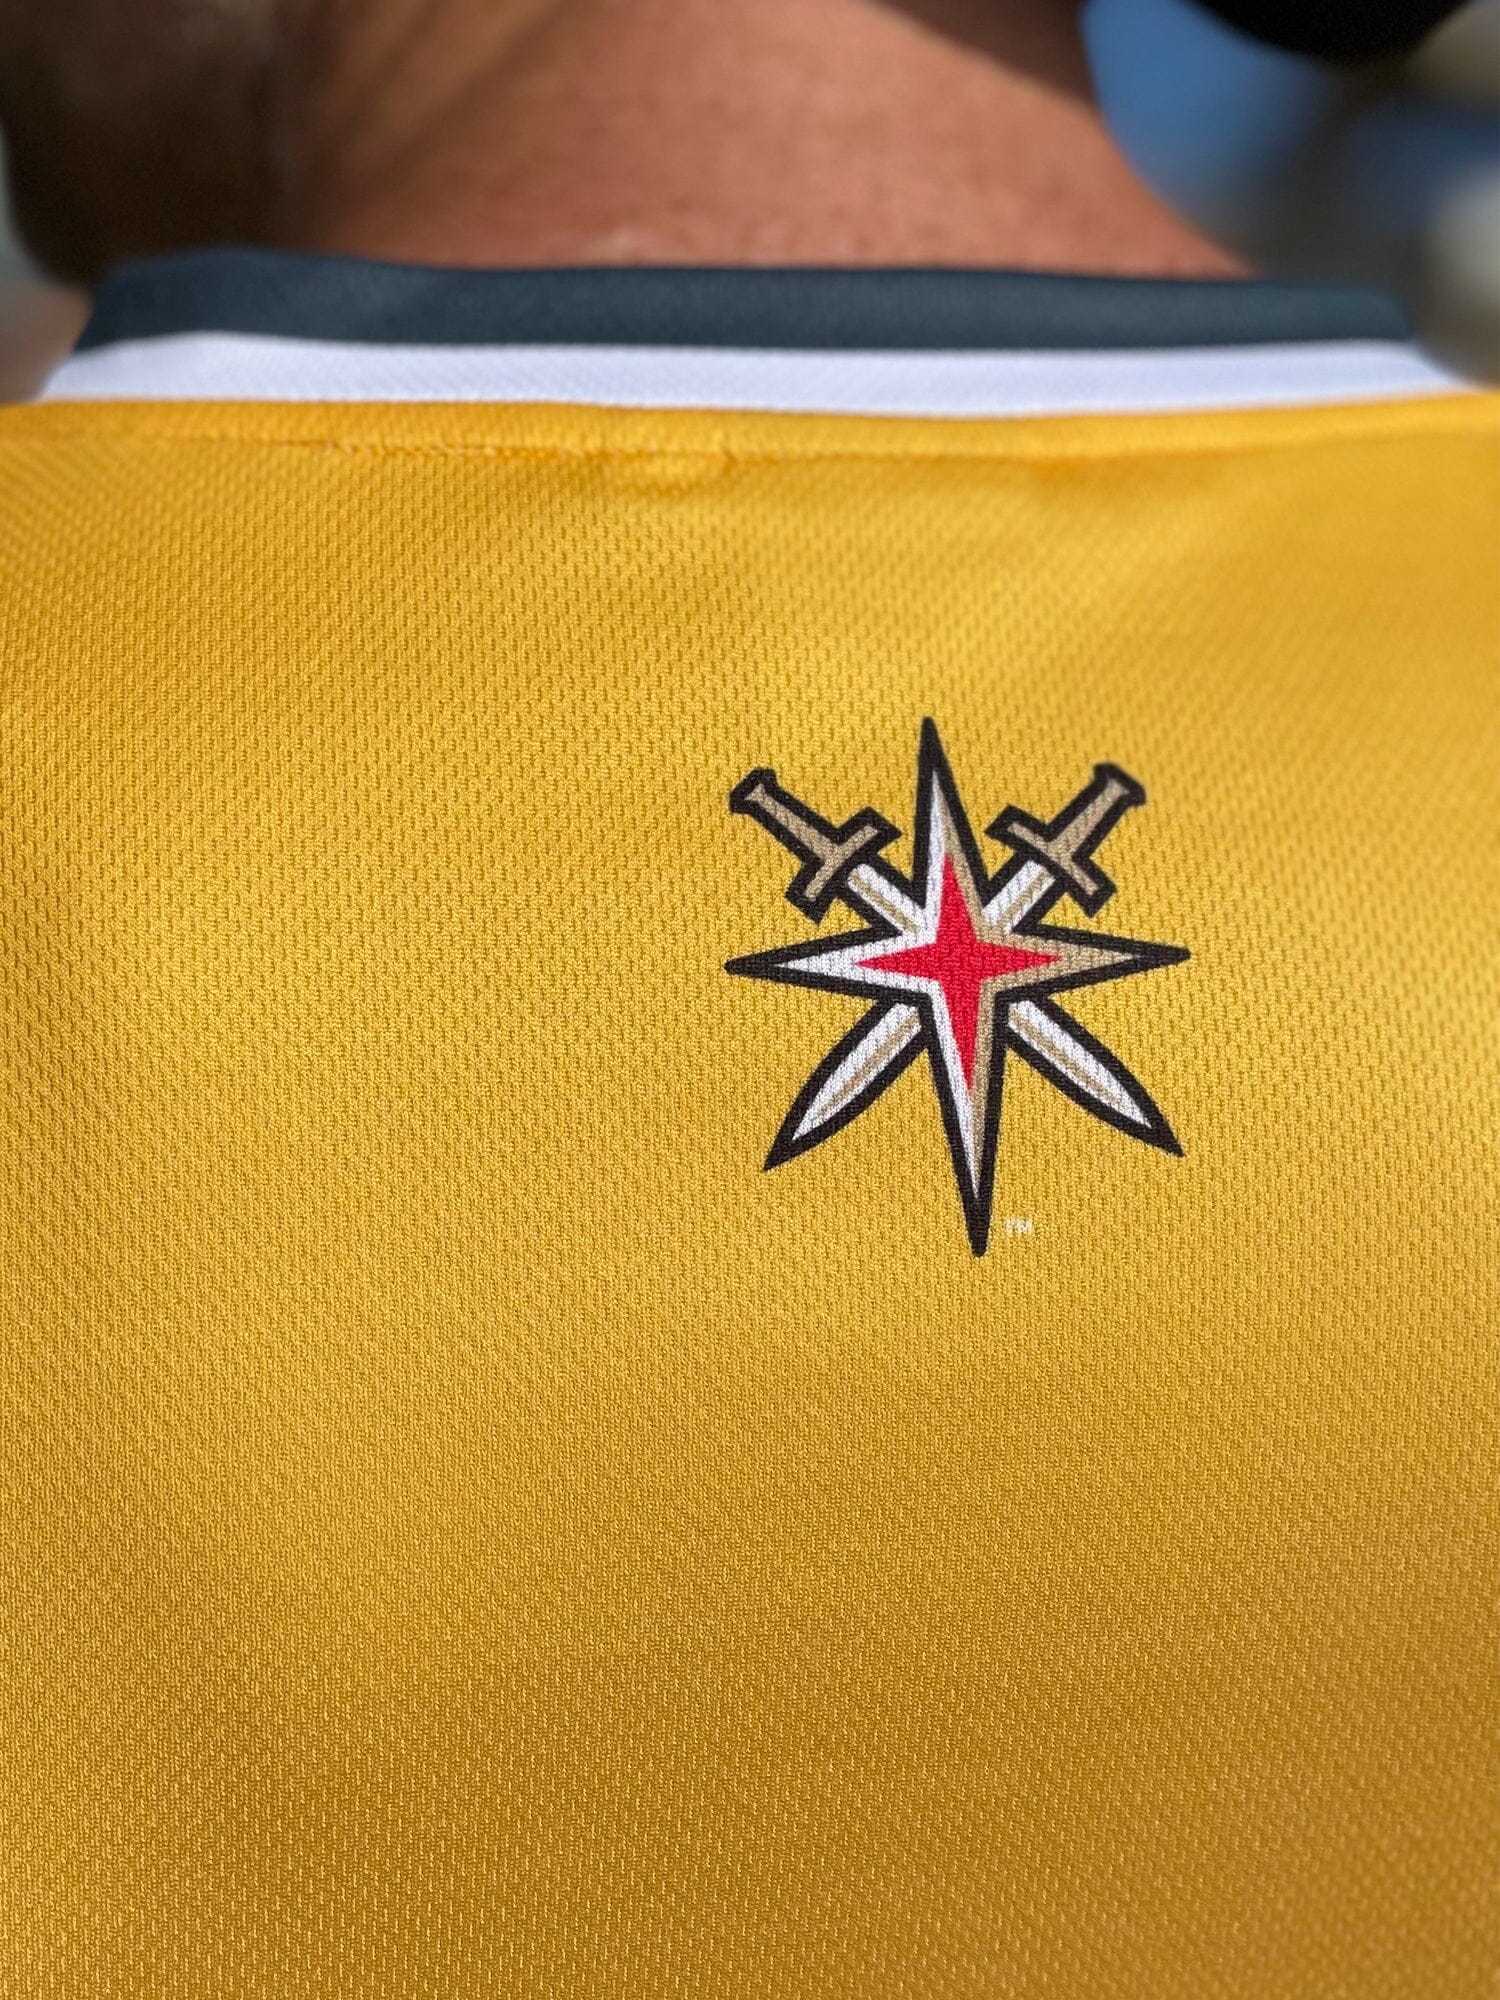 Vegas Golden Knights jersey concept : r/hockey